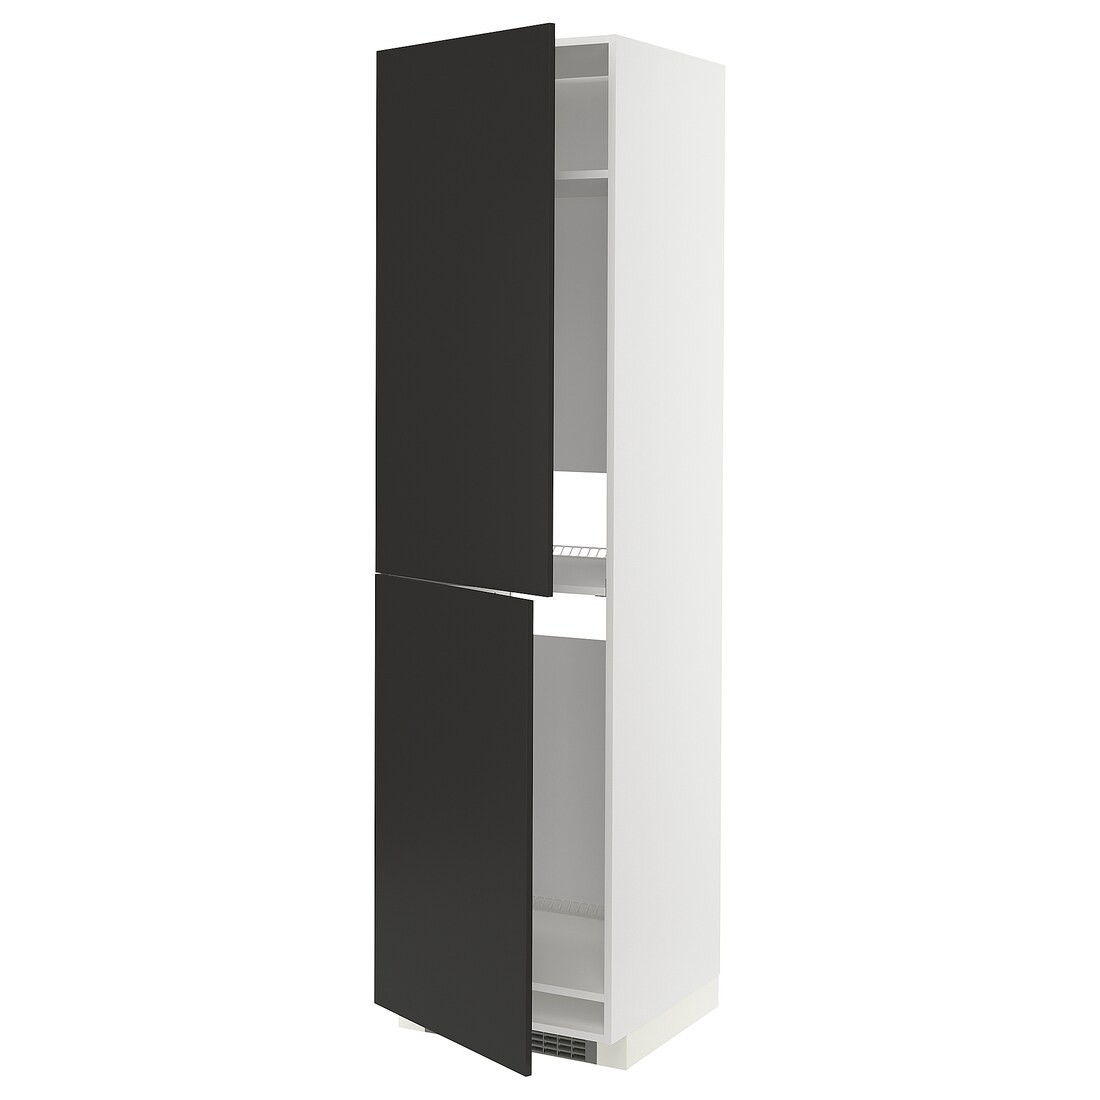 IKEA METOD МЕТОД Высокий шкаф для холодильника / морозильника, белый / Nickebo матовый антрацит, 60x60x220 см 59499078 594.990.78